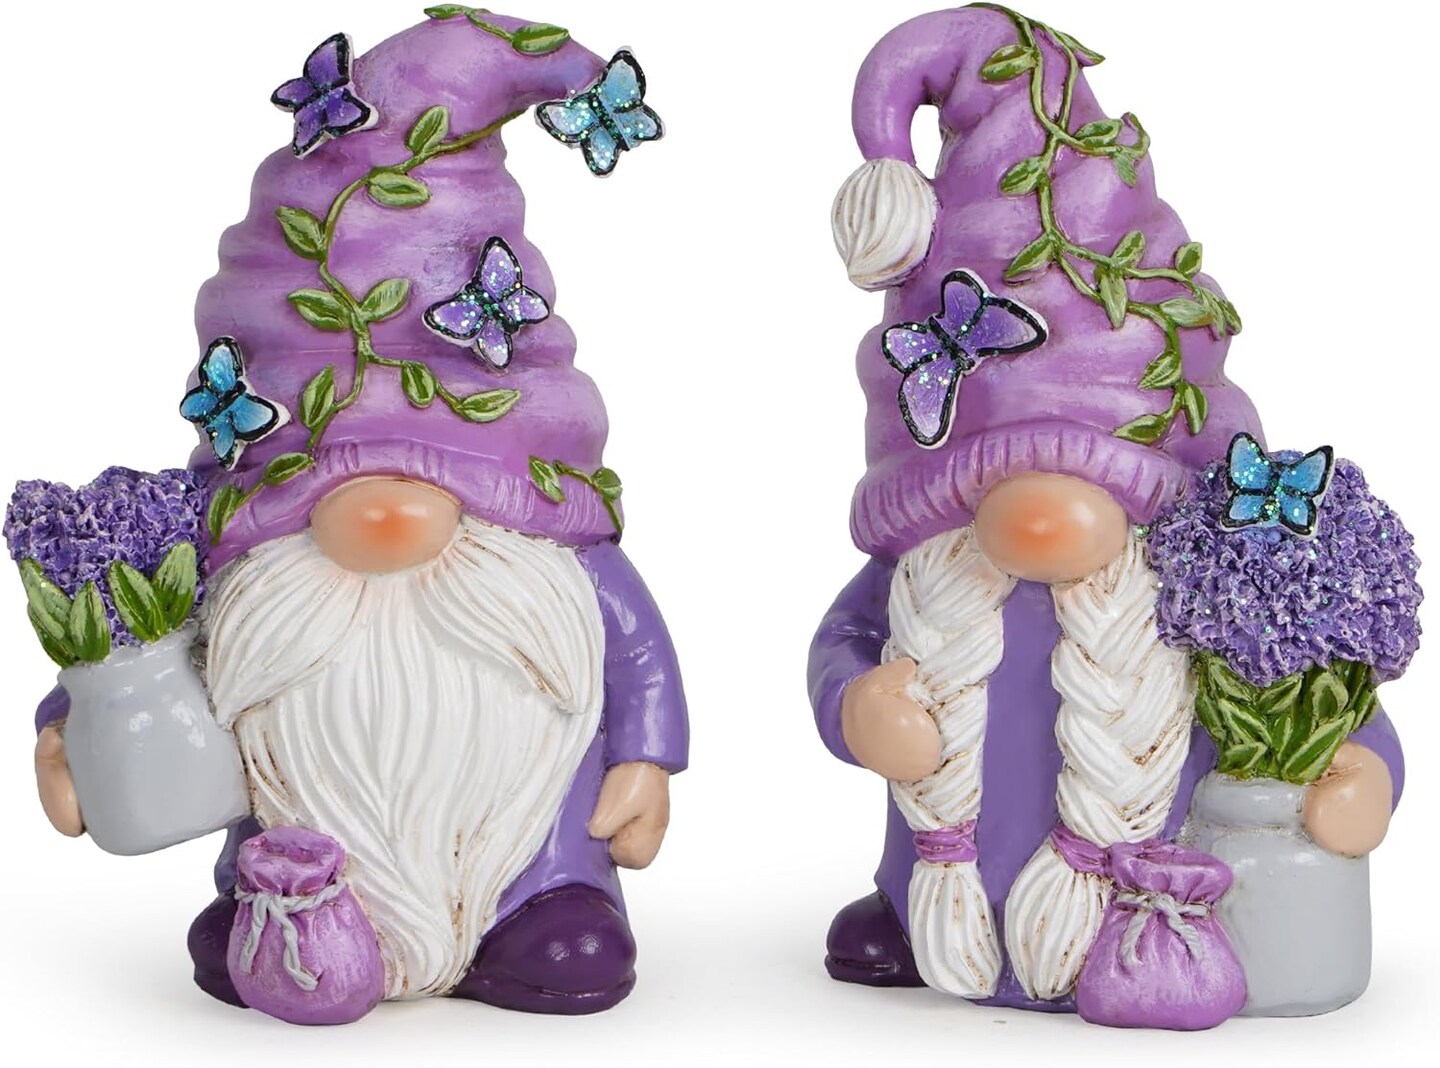 2 pieces Swedish Tomte Elf Dwarf Figurines Summer Gnome Indoor Home Decor Gift (Lavender).